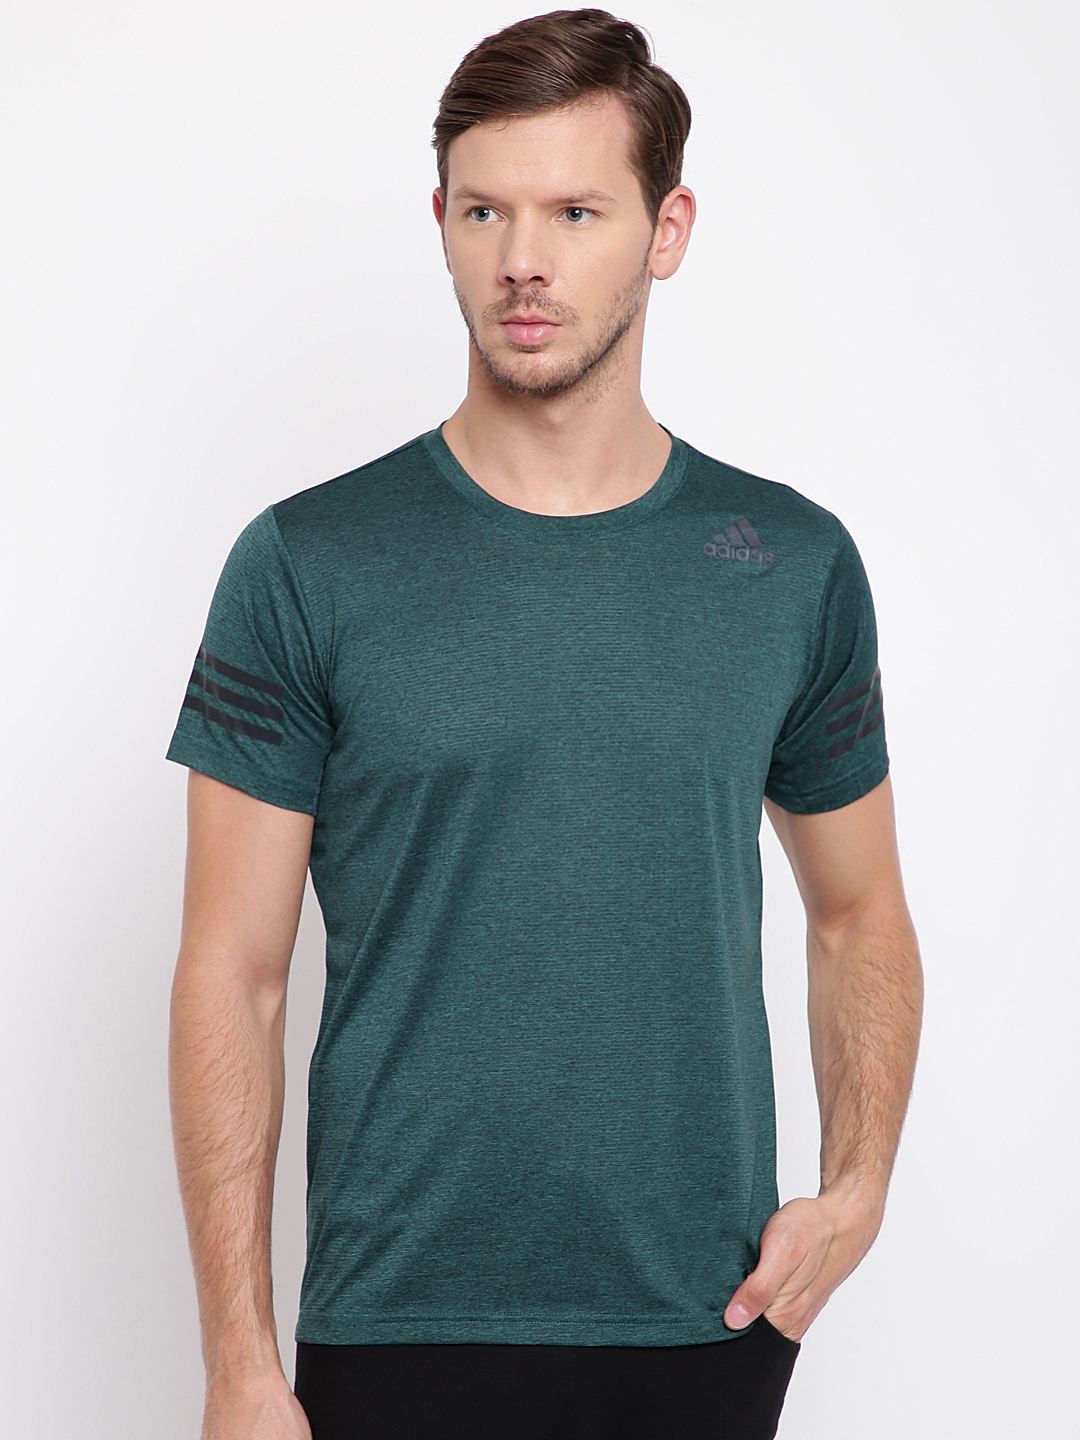 Adidas Green Freelift Climacool Solid Round Neck Training T Shirt - Tshirts Men 7101442 |